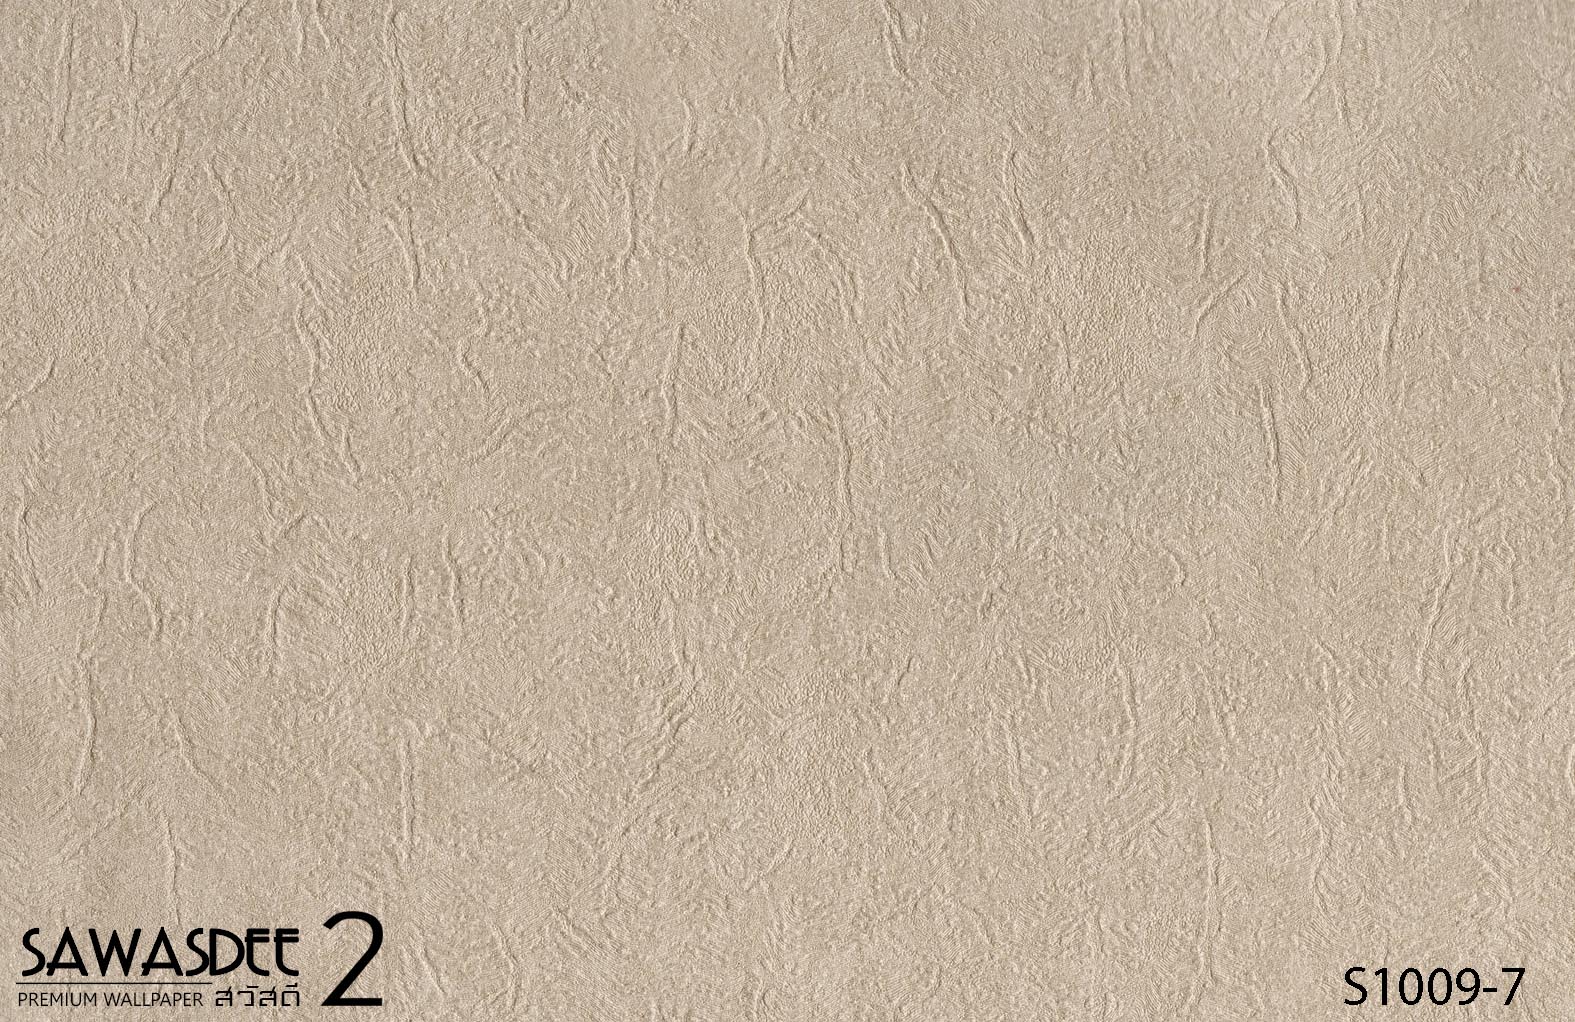 Wallpaper (SAWASDEE 2) S1009-7